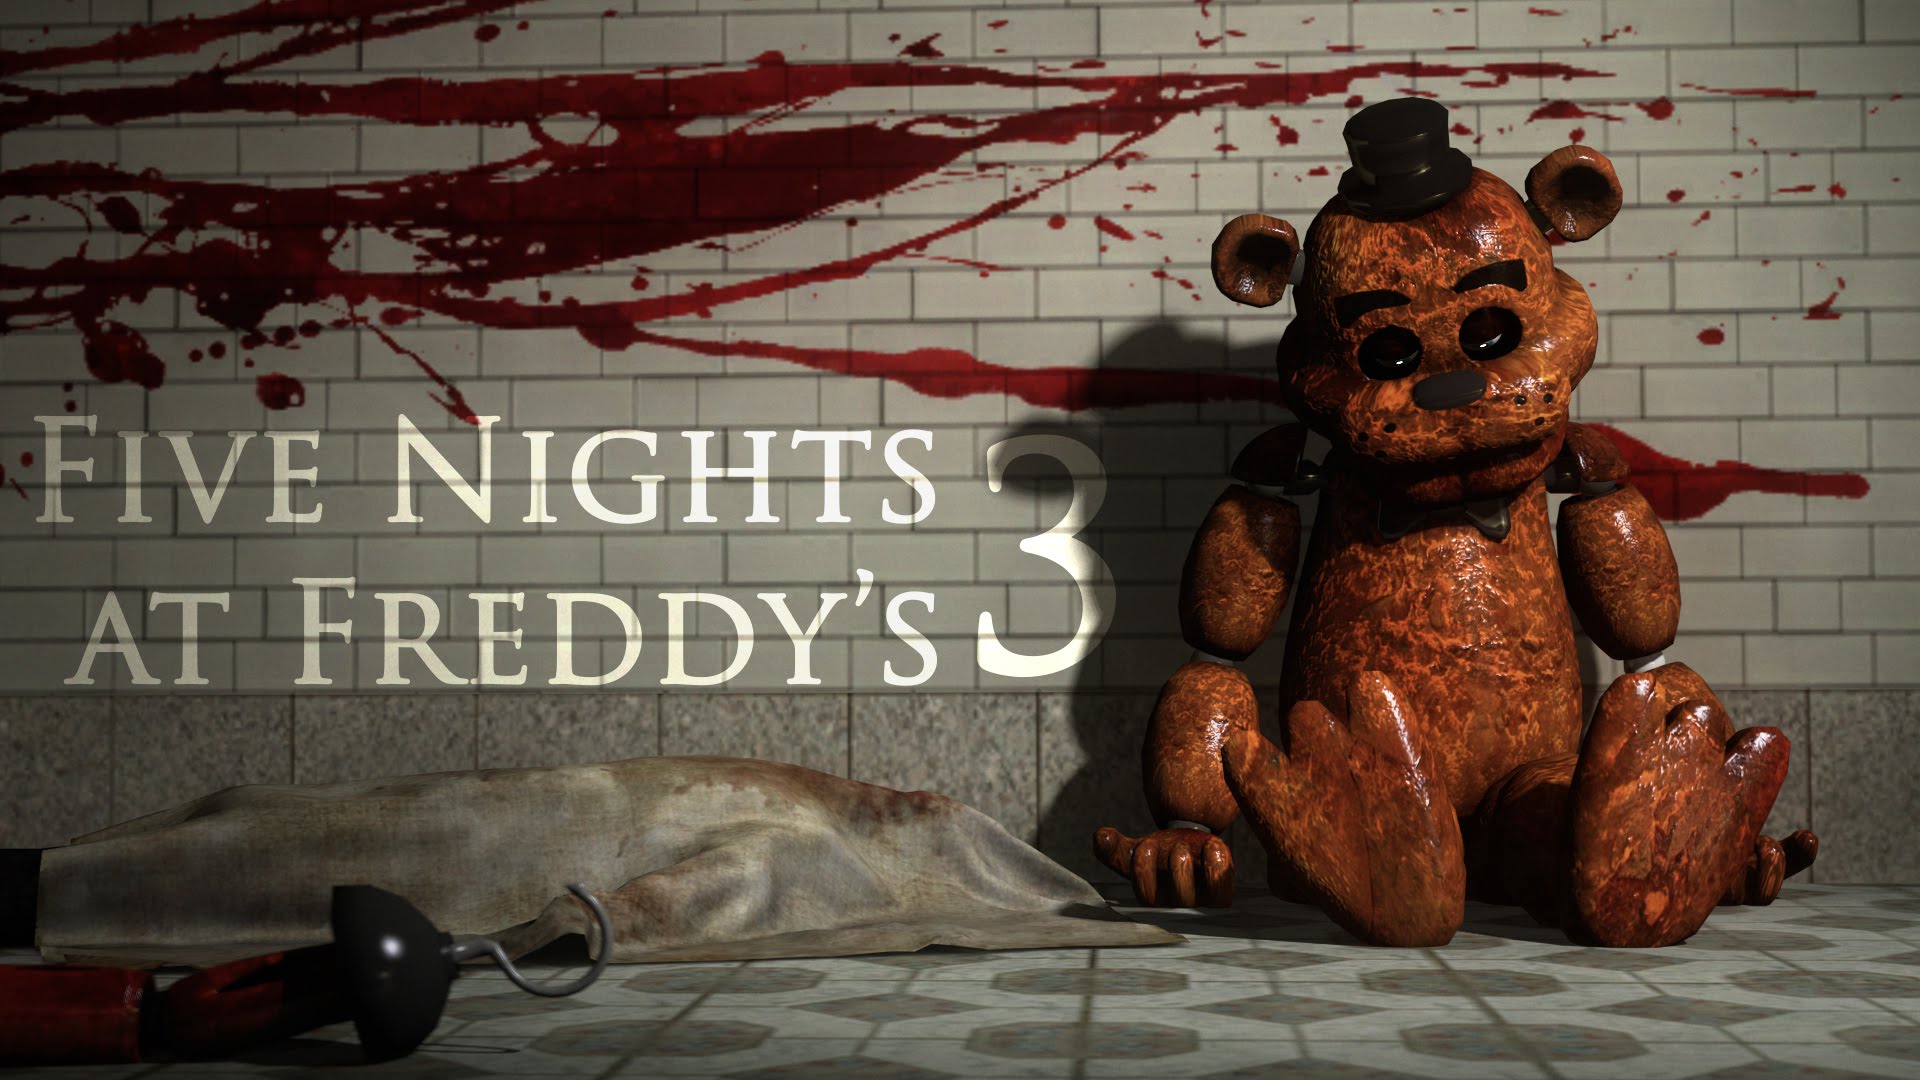 Five Nights At Freddy's' Trailer: The Horror Game Phenomenon